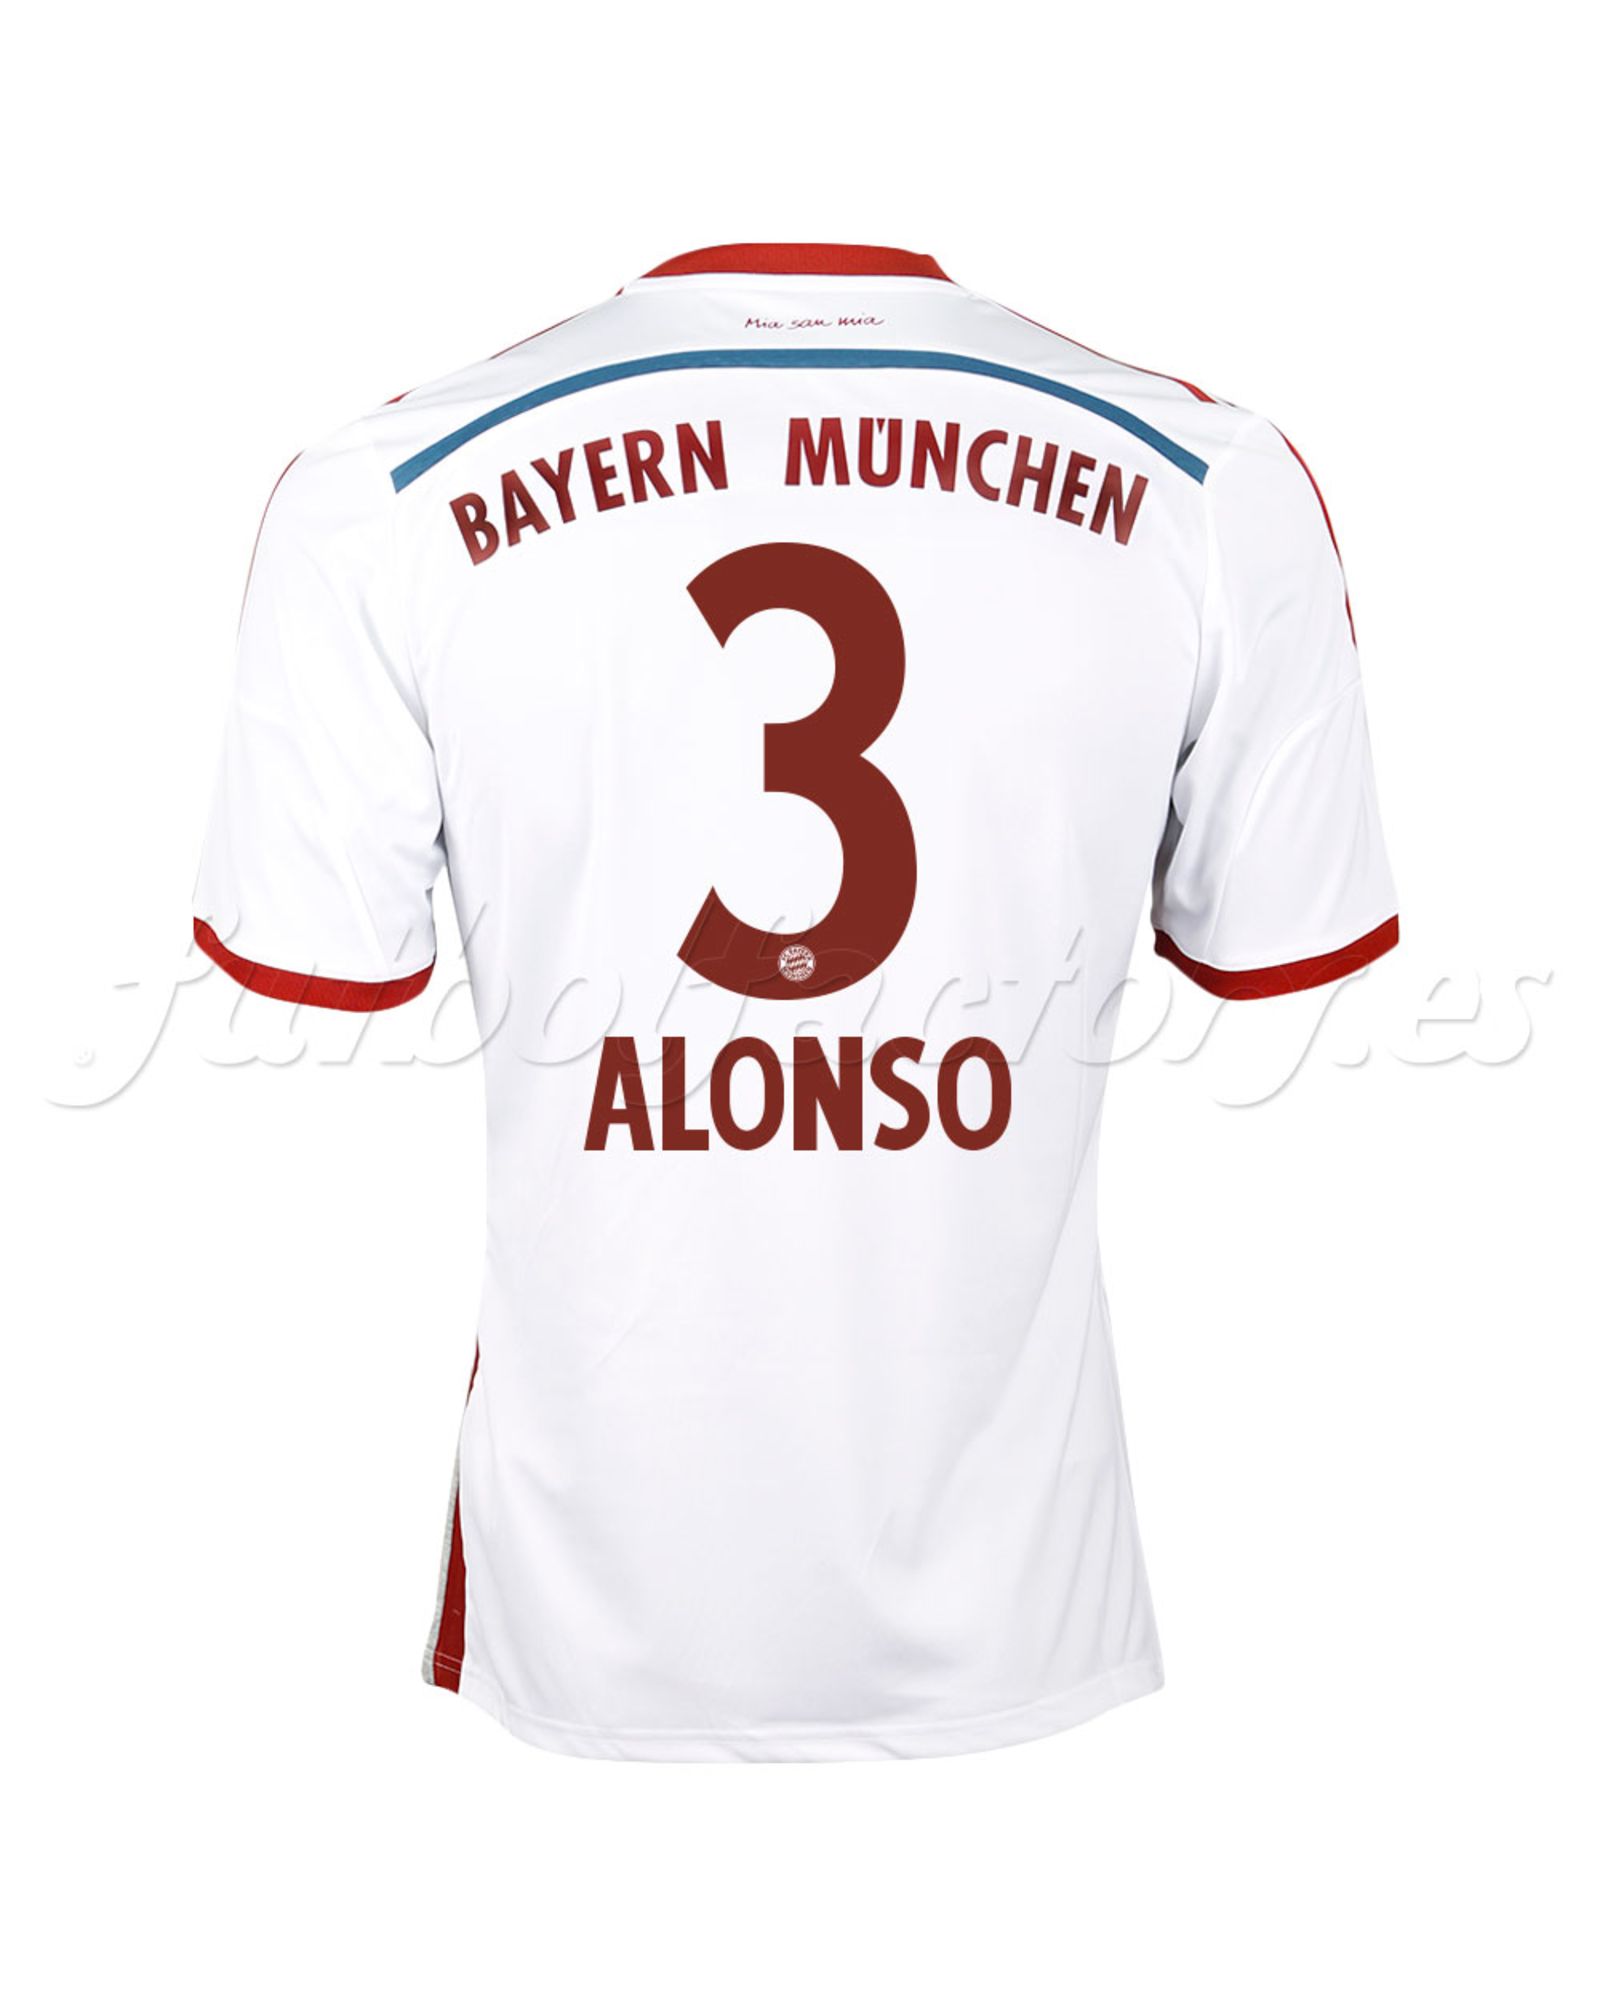 Camiseta Bayern Munich 2ª 2014/2015 Alonso Blanco - Fútbol Factory